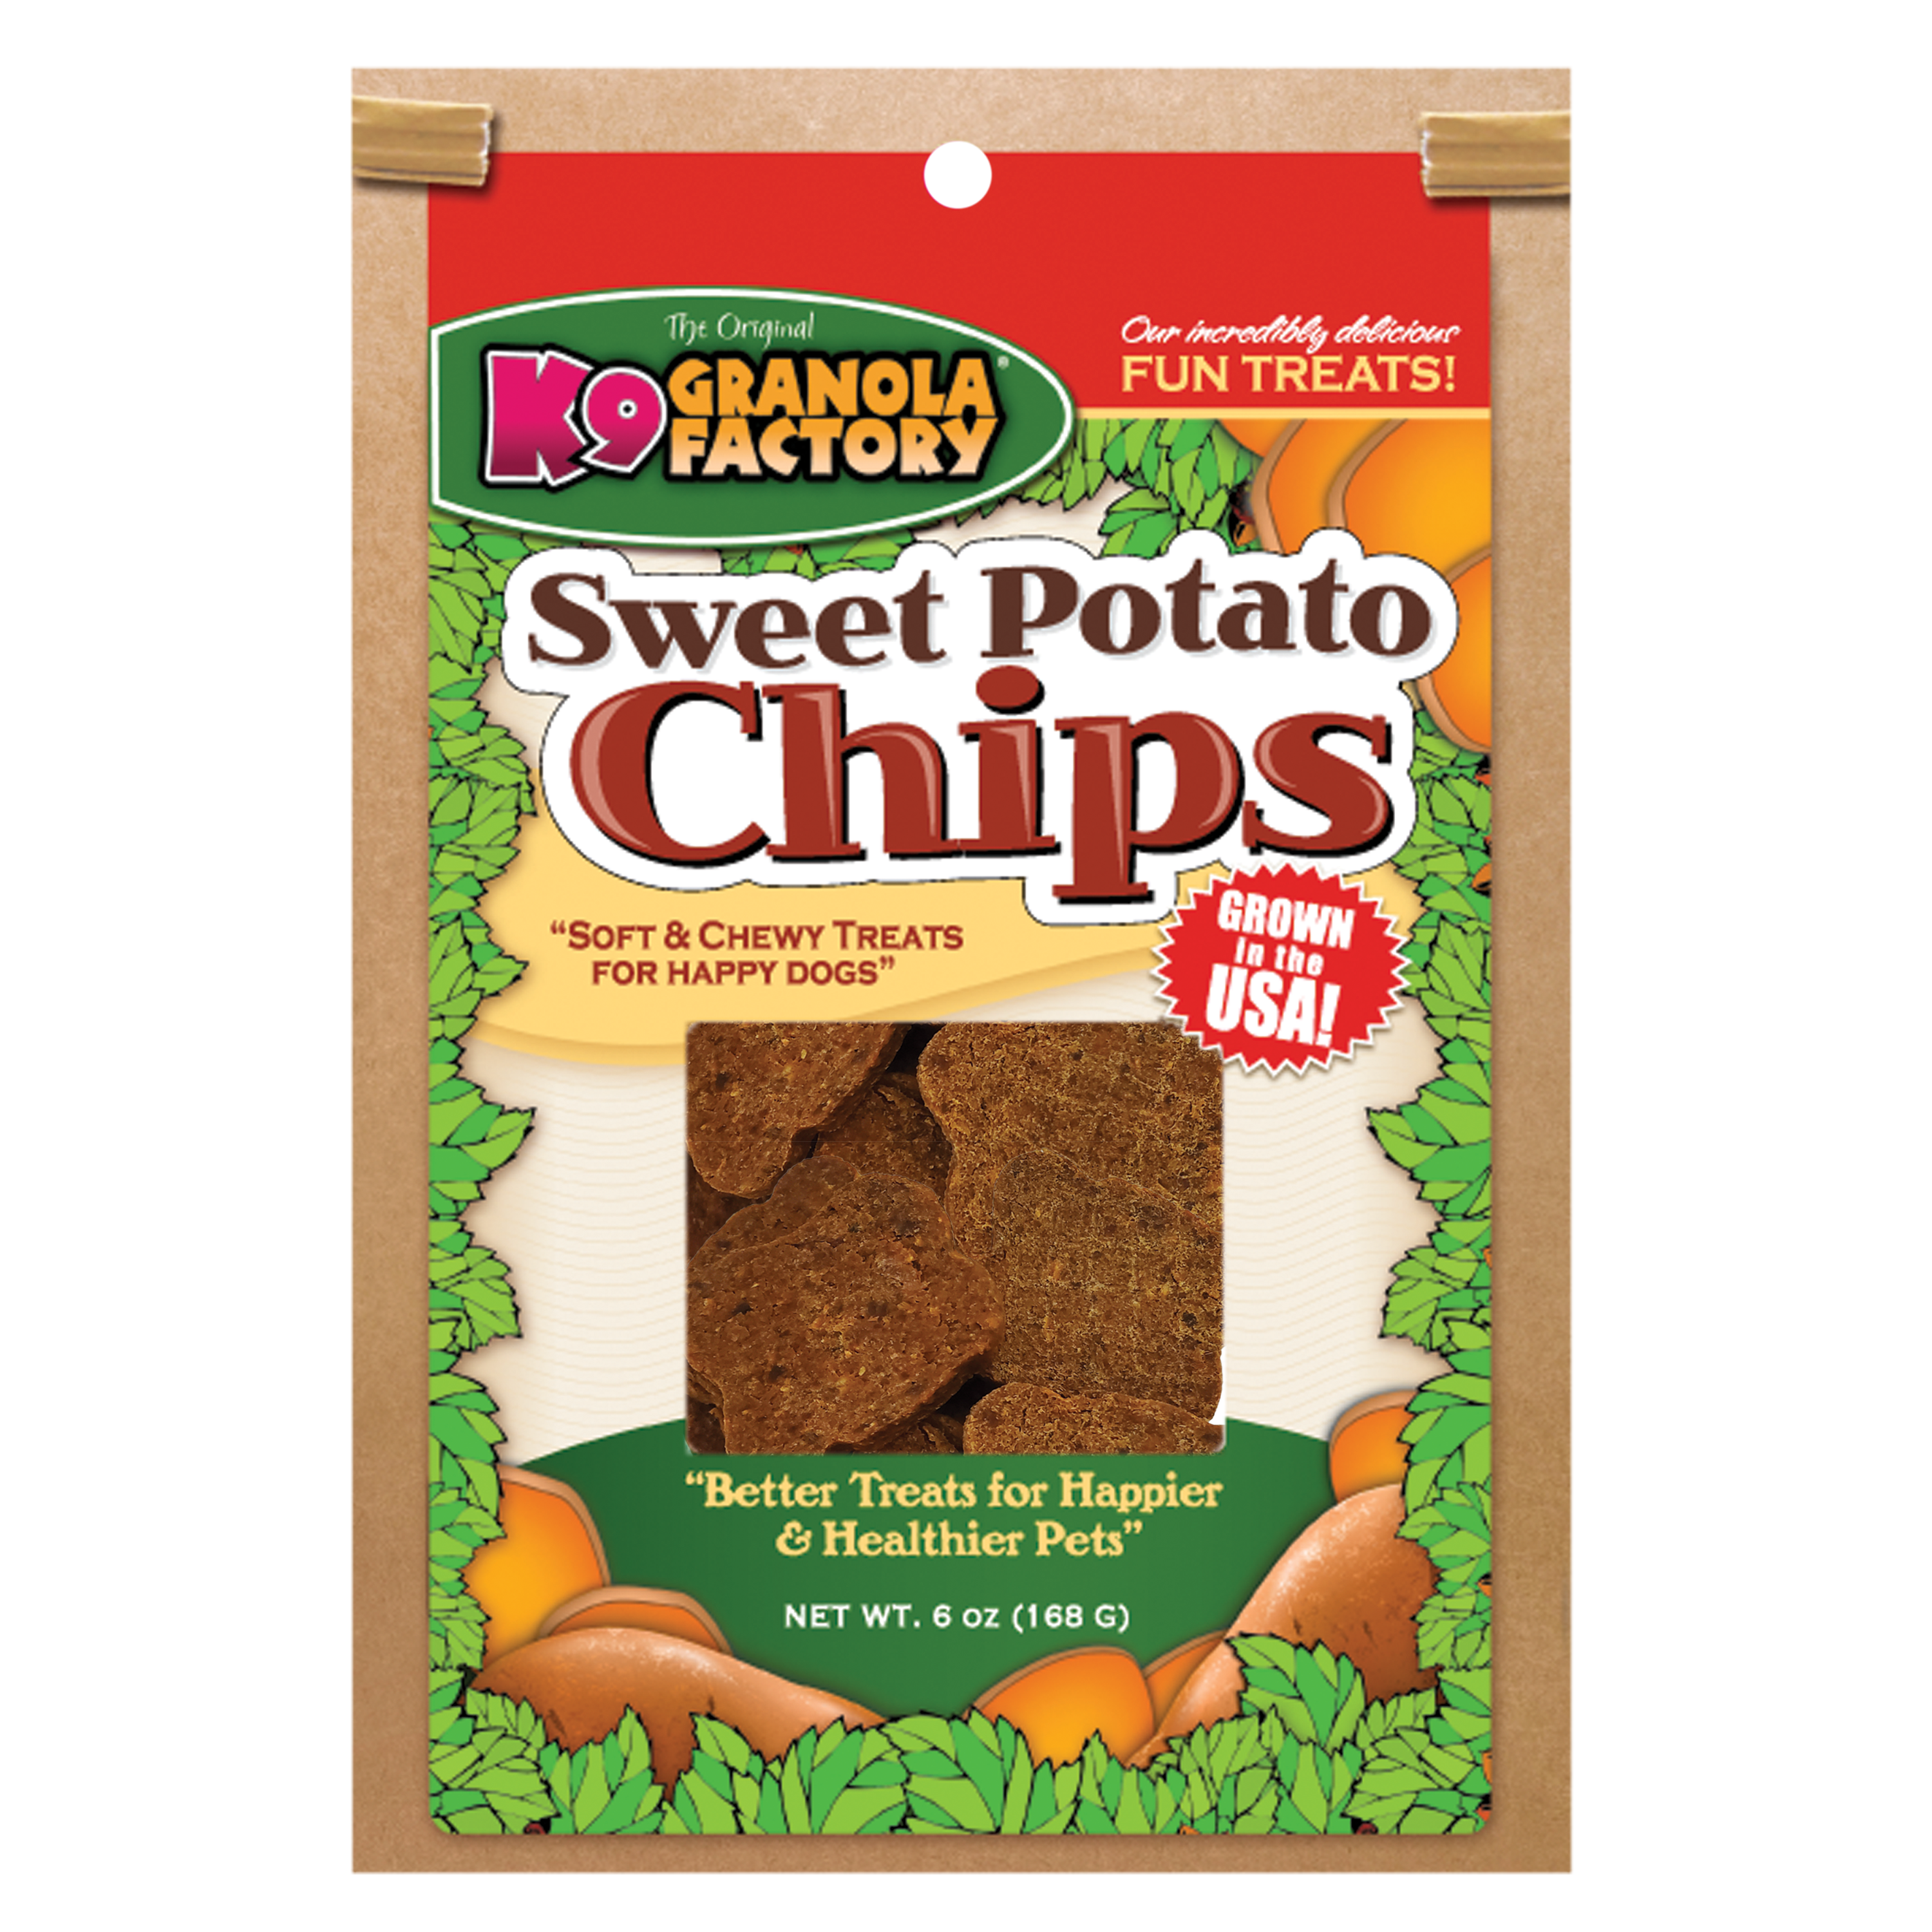 K9 Granola Factory Chip Collection Sweet Potato Chips Dog Treats, 6oz